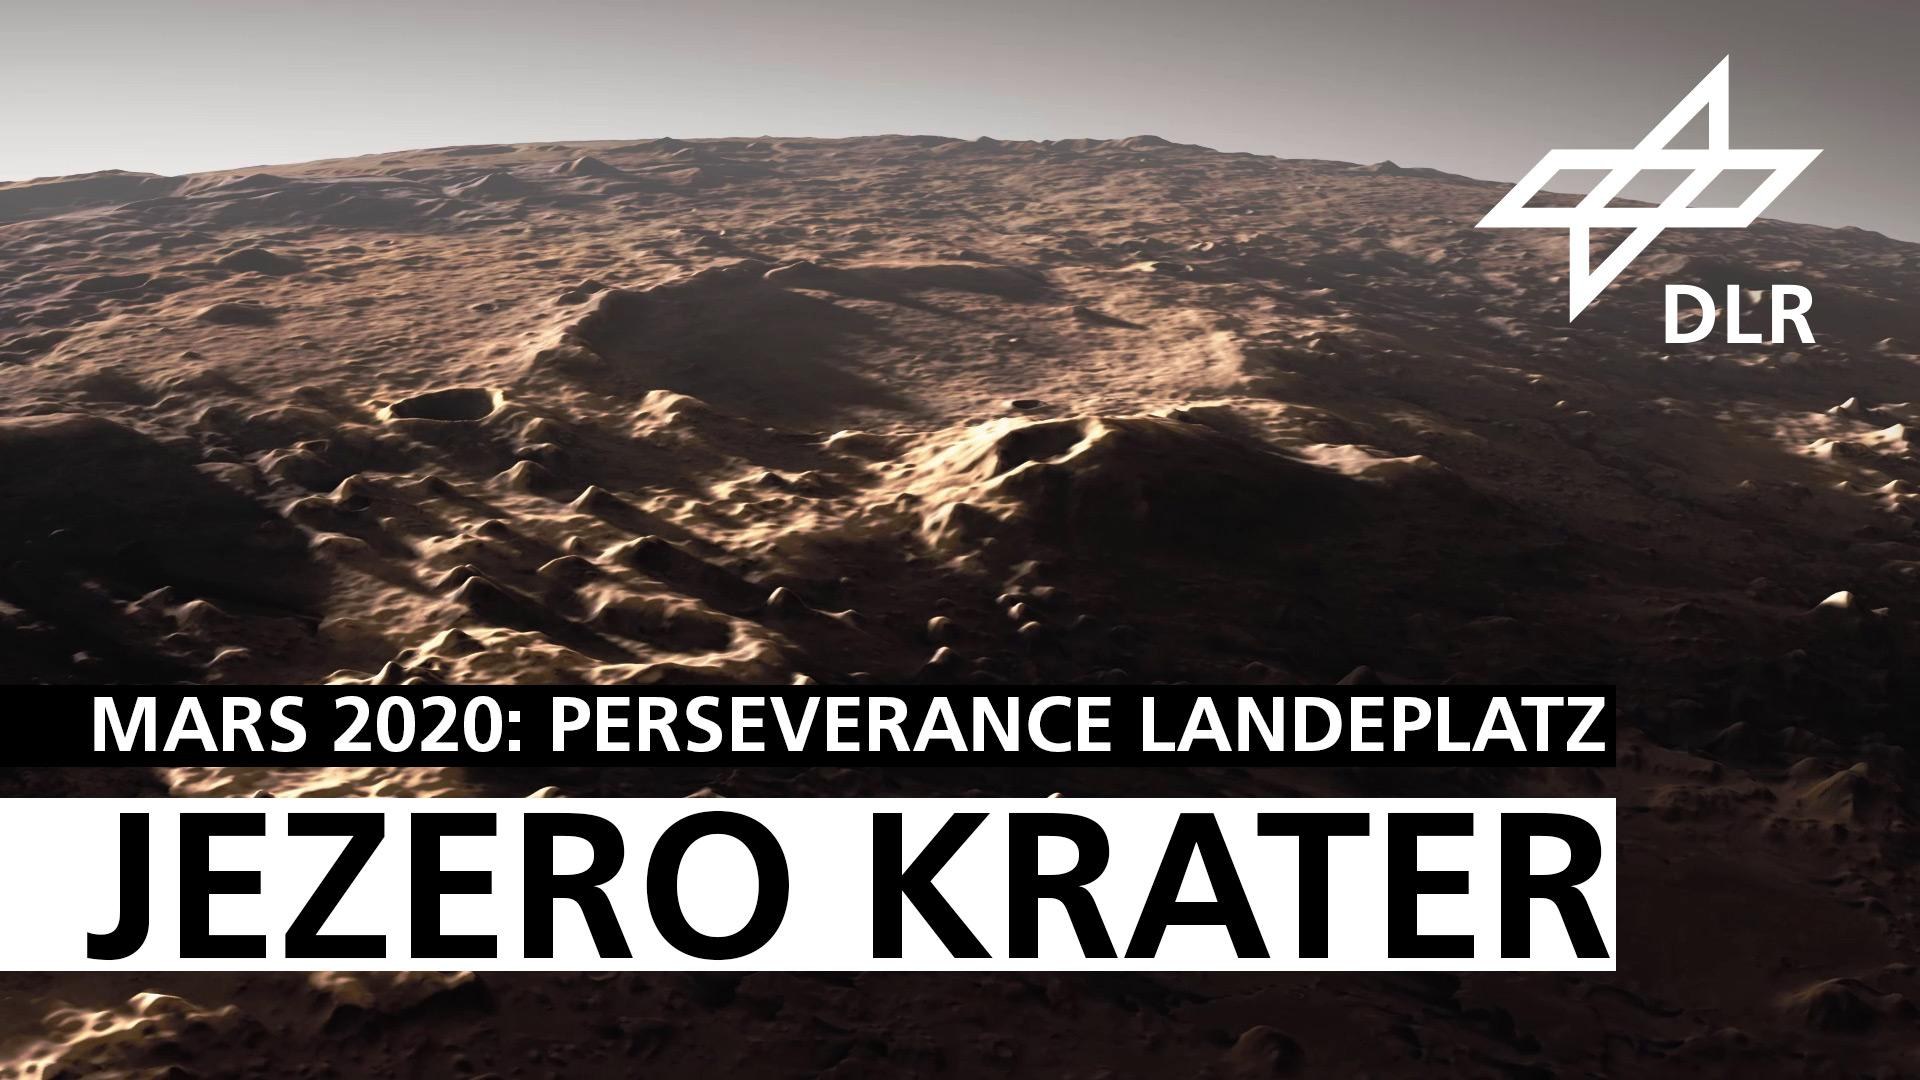 Video still: Flight over Jezero Crater – landing site of the Mars 2020 mission